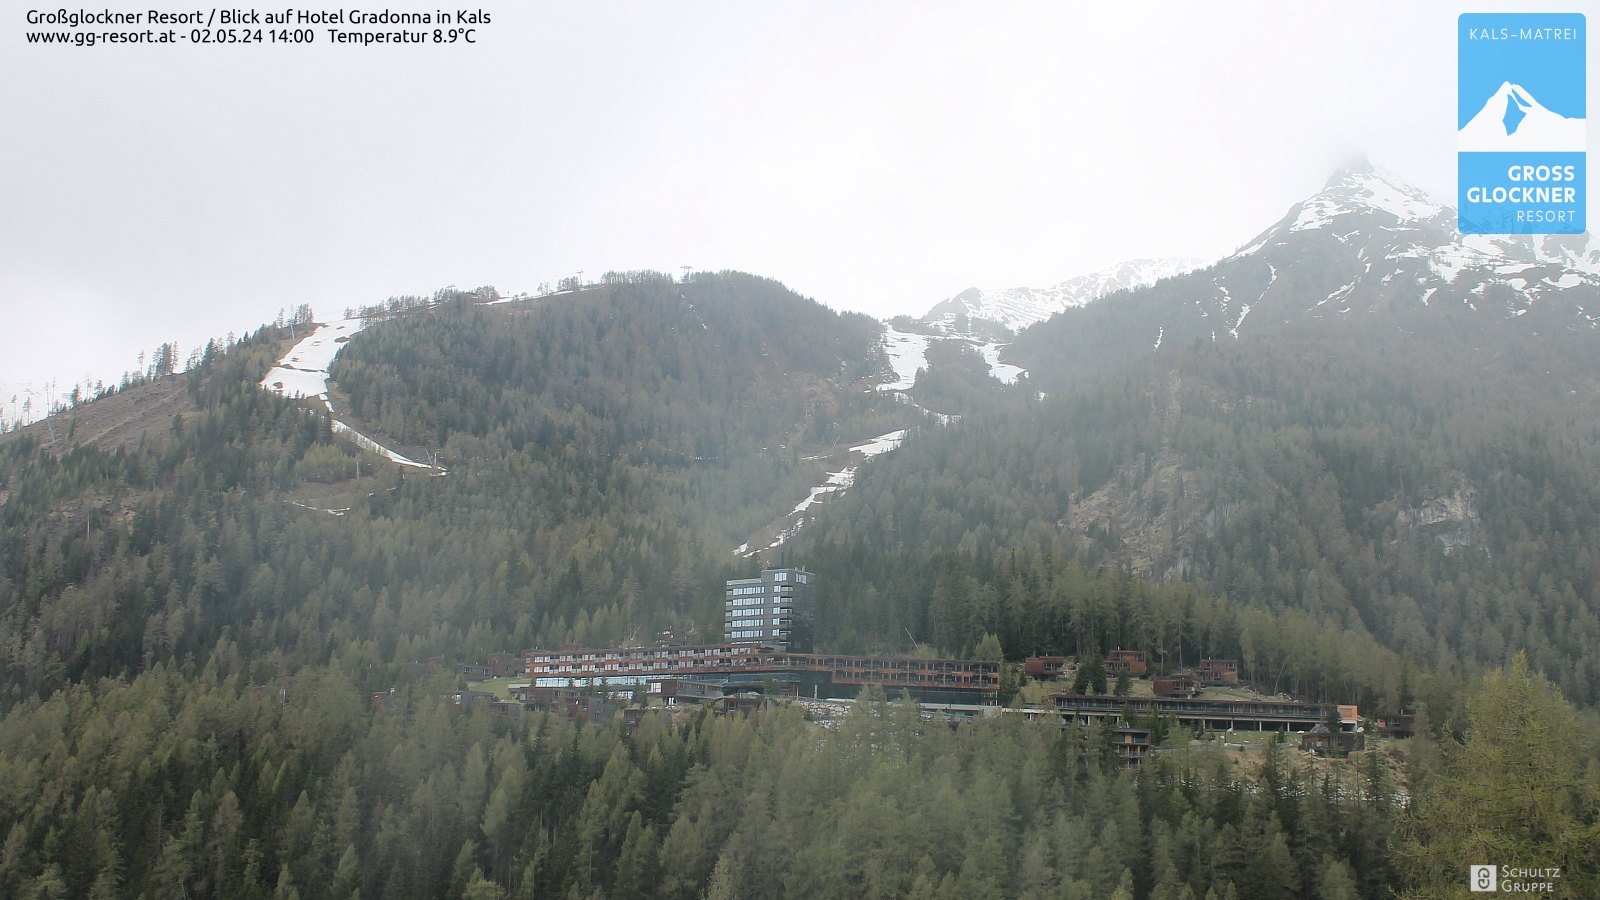 Grossglockner resort - Kals webcam - Gradonna Mountain Resort